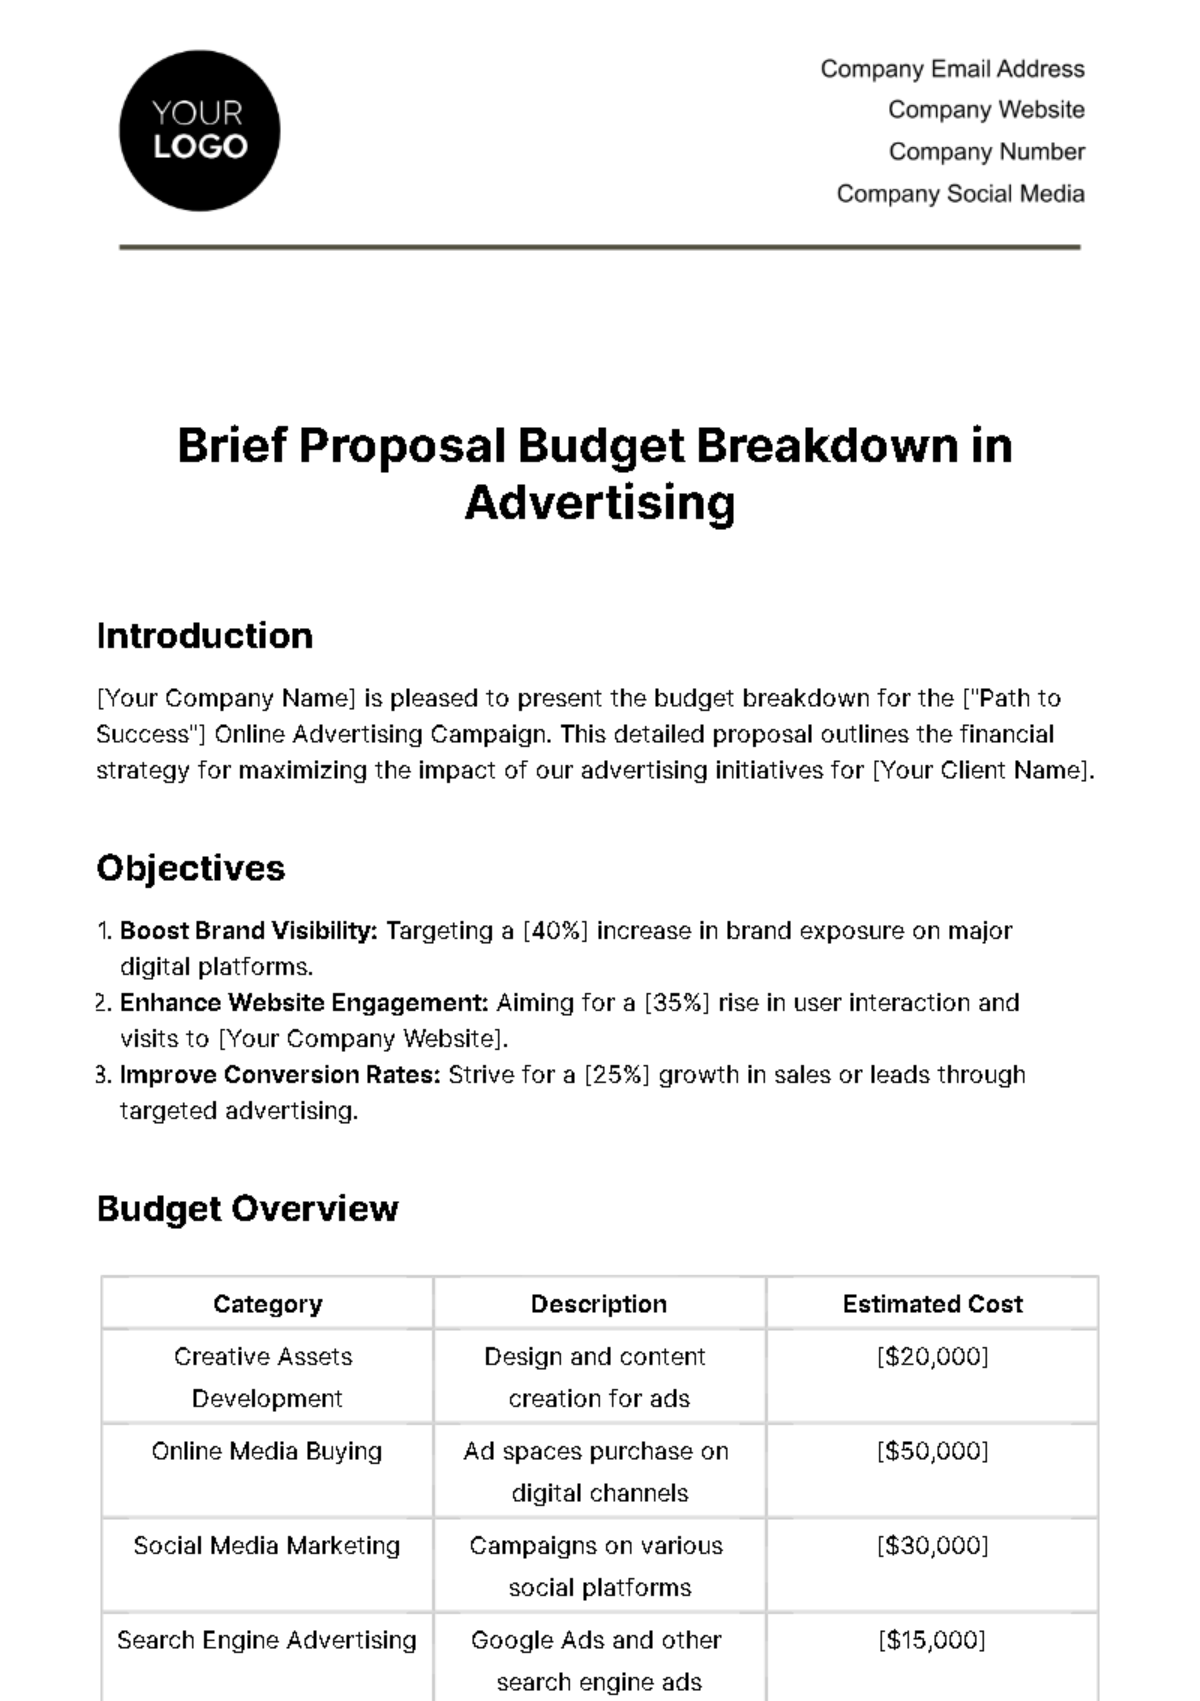 Free Brief Proposal Budget Breakdown in Advertising Template